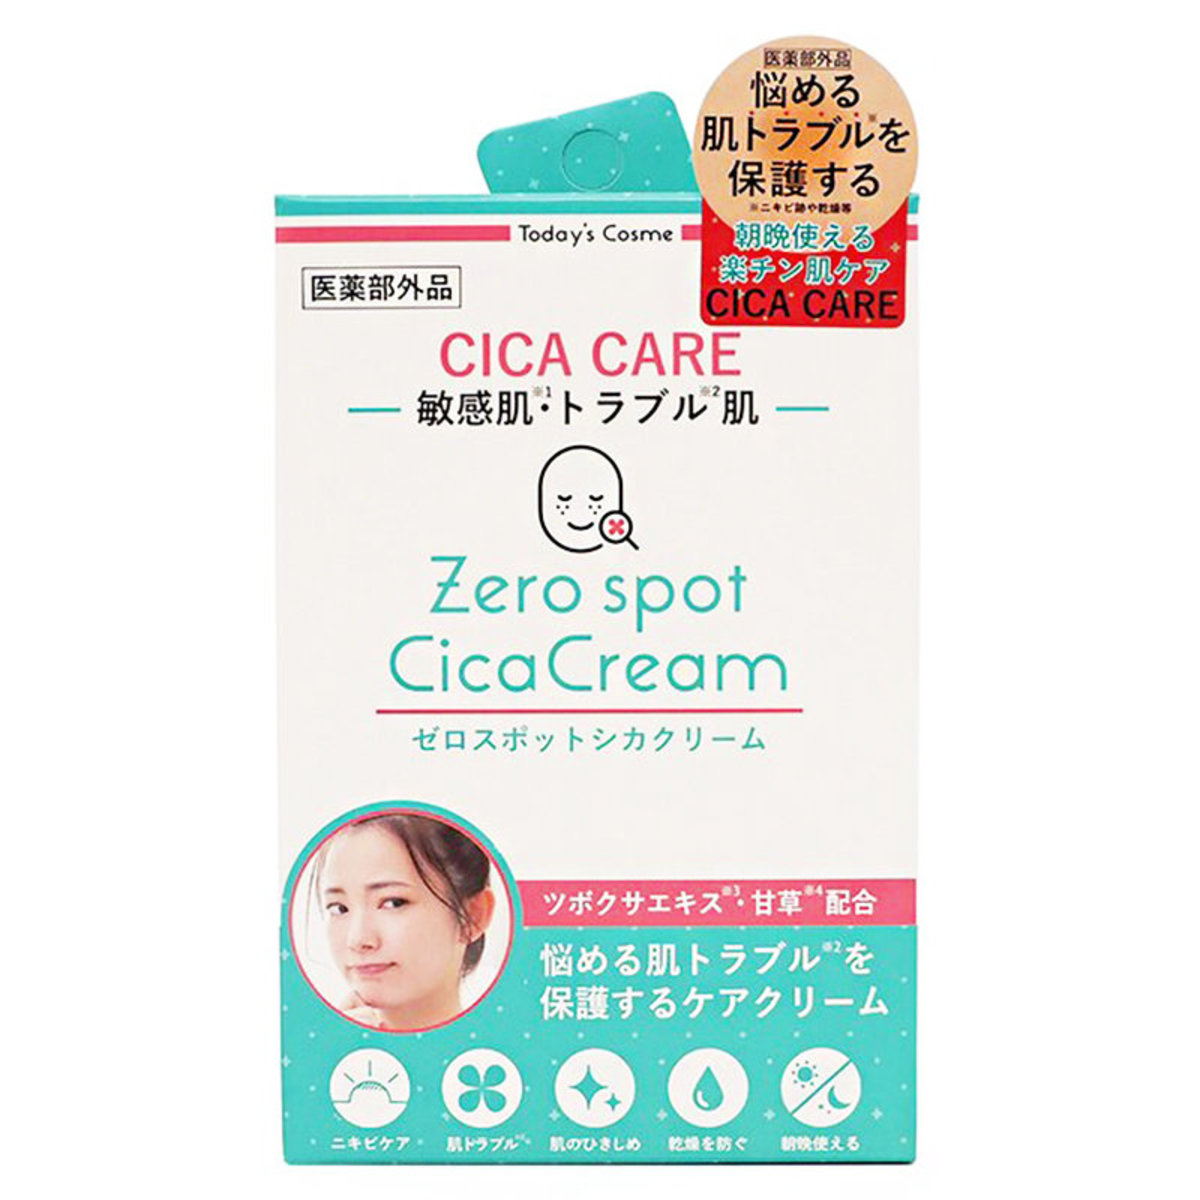 Zero Spot Cica Cream 30g (Parallel Imports Product)